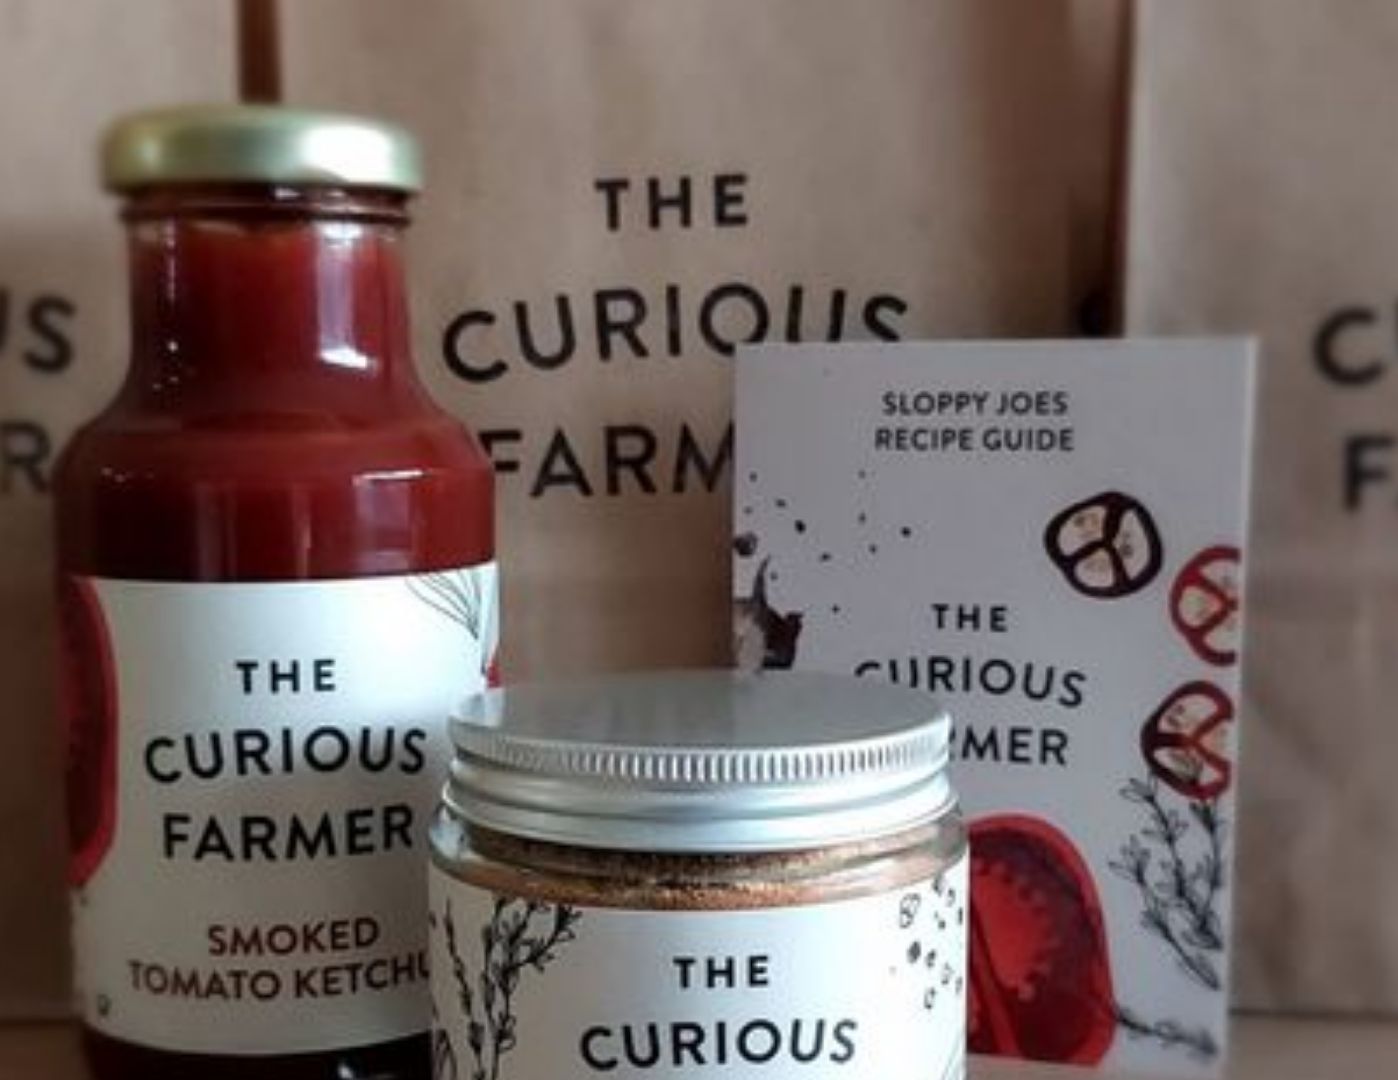 Curious Farmer locally made sauces